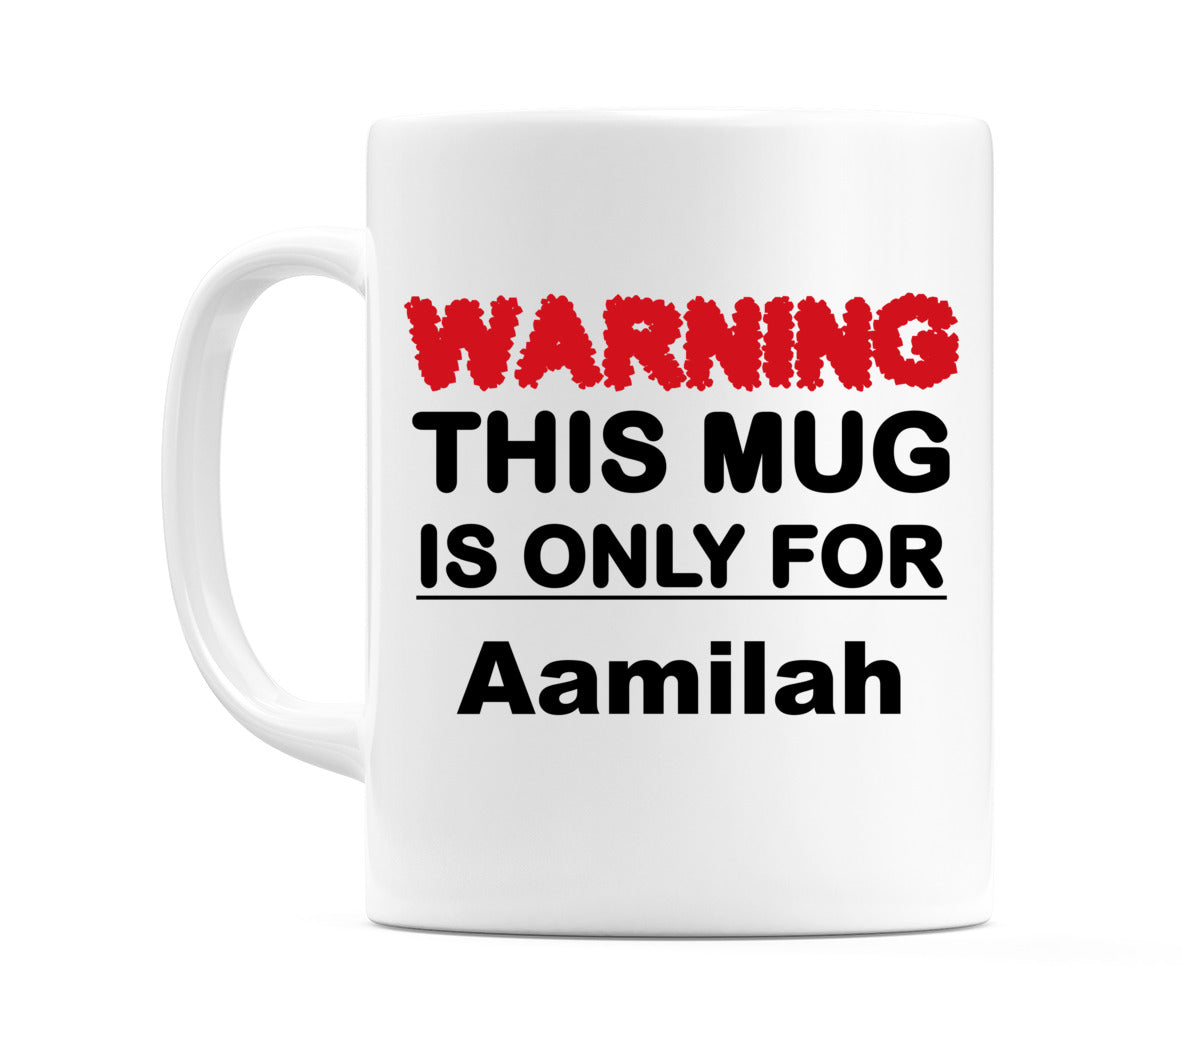 Warning This Mug is ONLY for Aamilah Mug